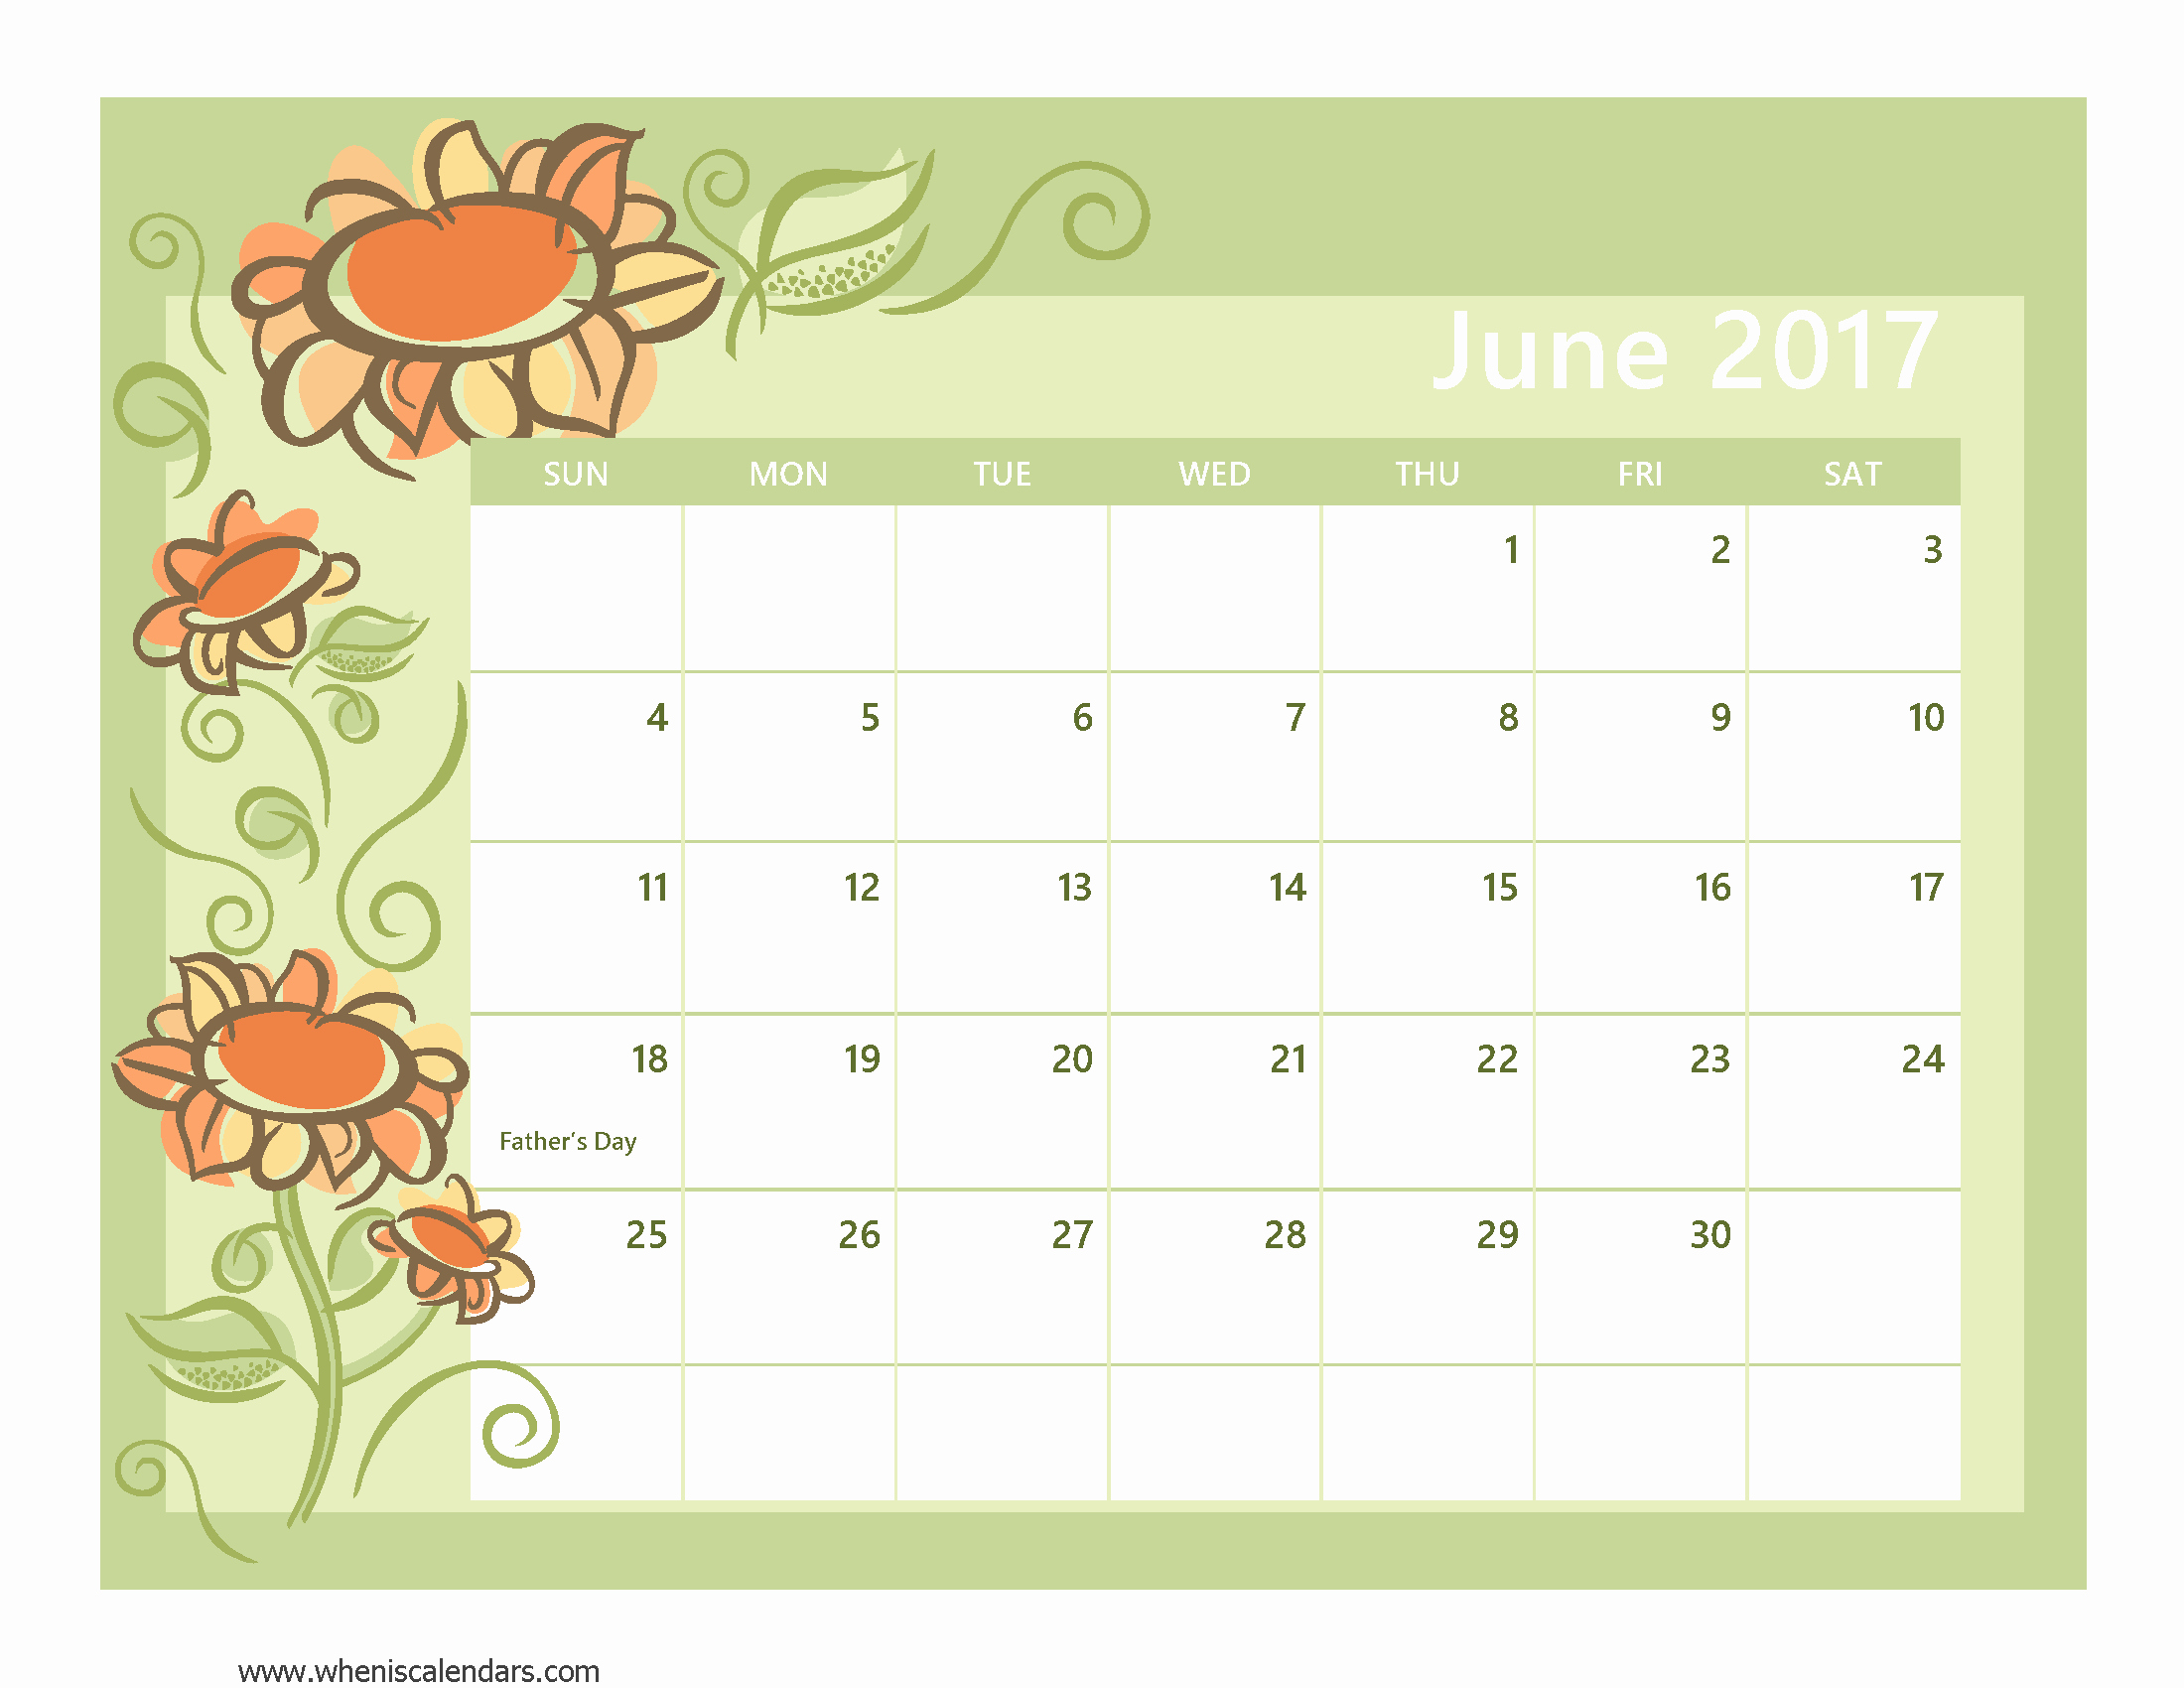 2017 Calendar with Holidays Template Elegant June 2017 Calendar with Holidays